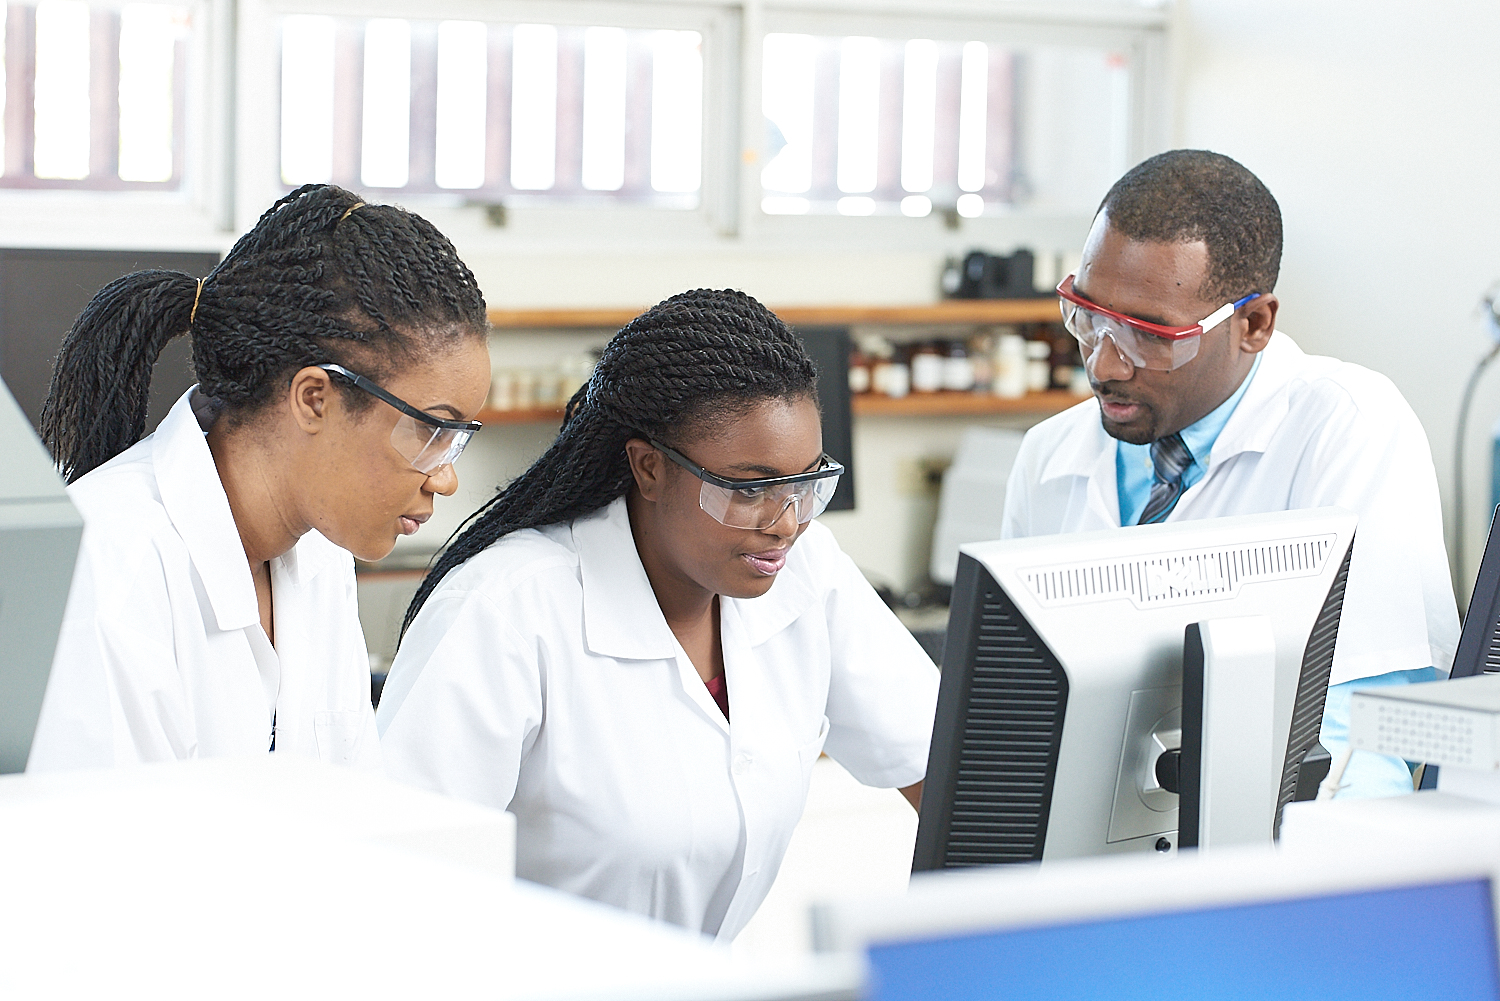 kuantan medical centre job vacancy 2015 in jamaica live